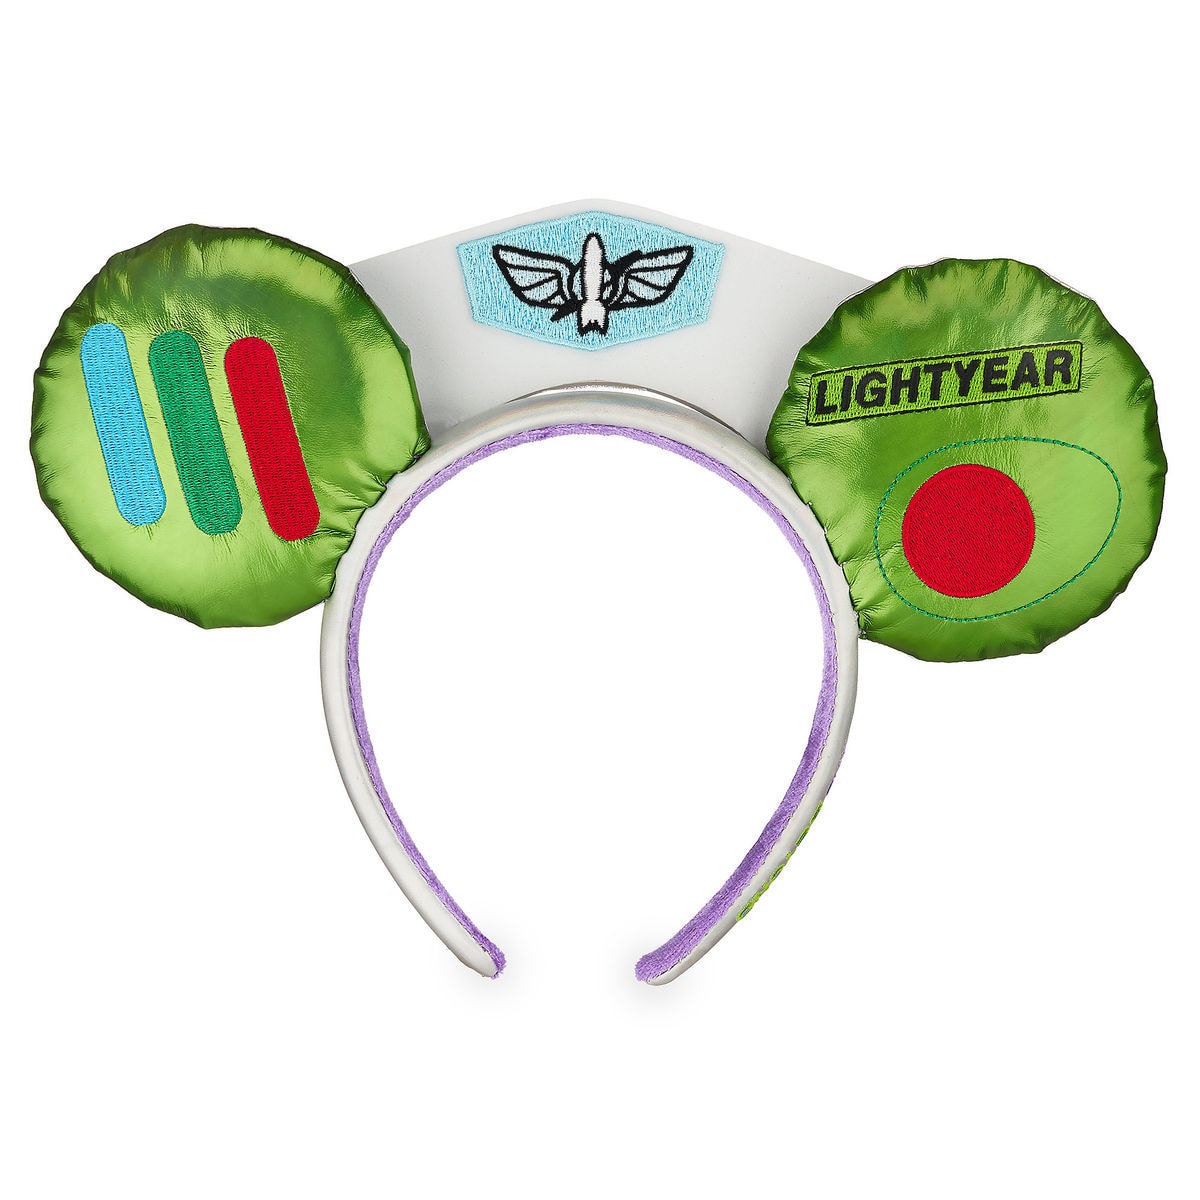 Blast Off With The Mickey Mouse Buzz Lightyear Ear Headband